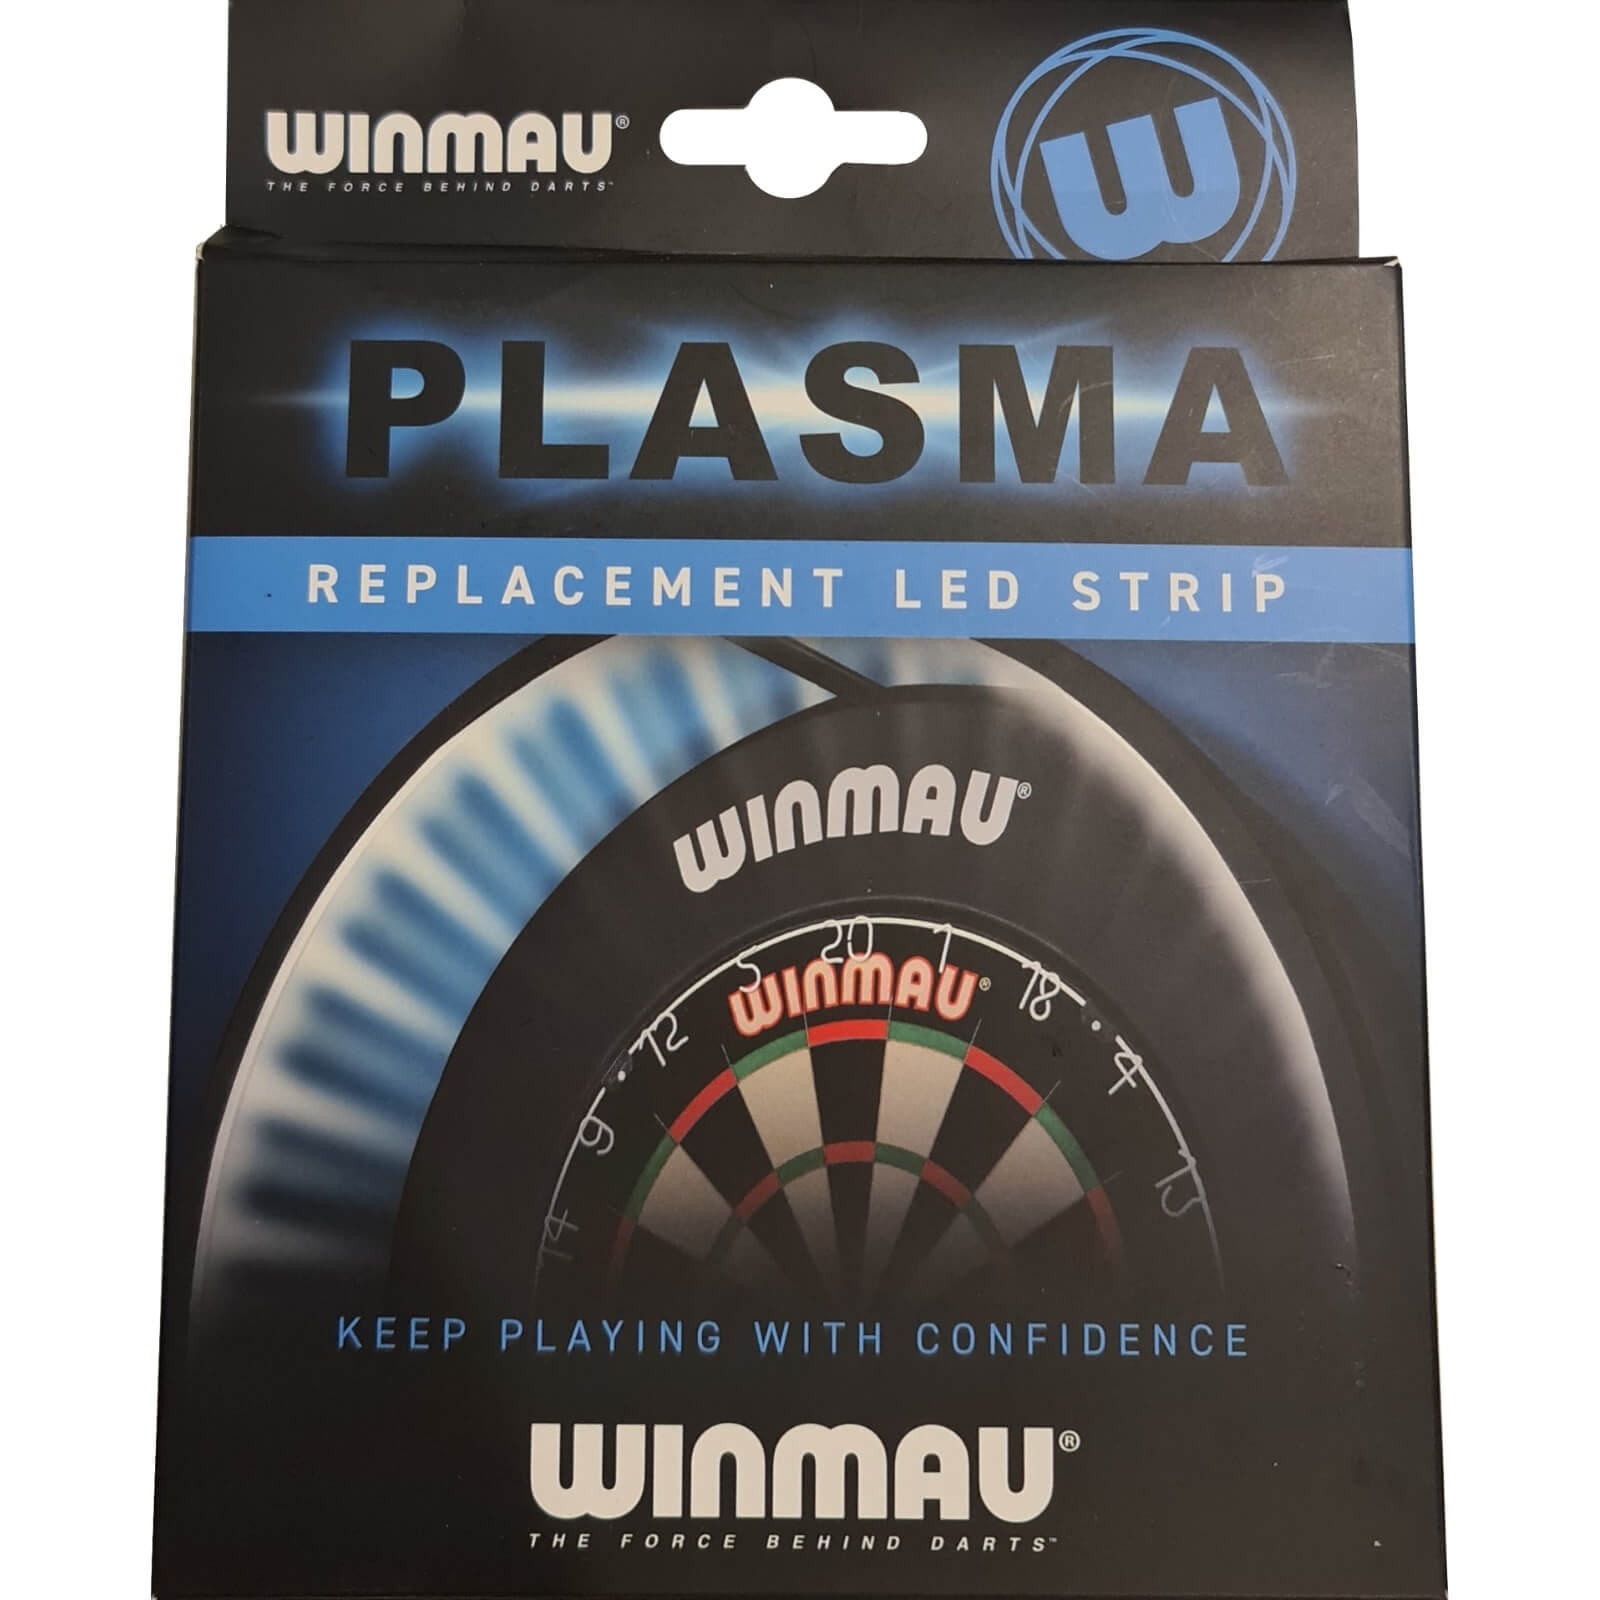 Dartboard Accessories - Winmau - Plasma Replacement LED Strip 